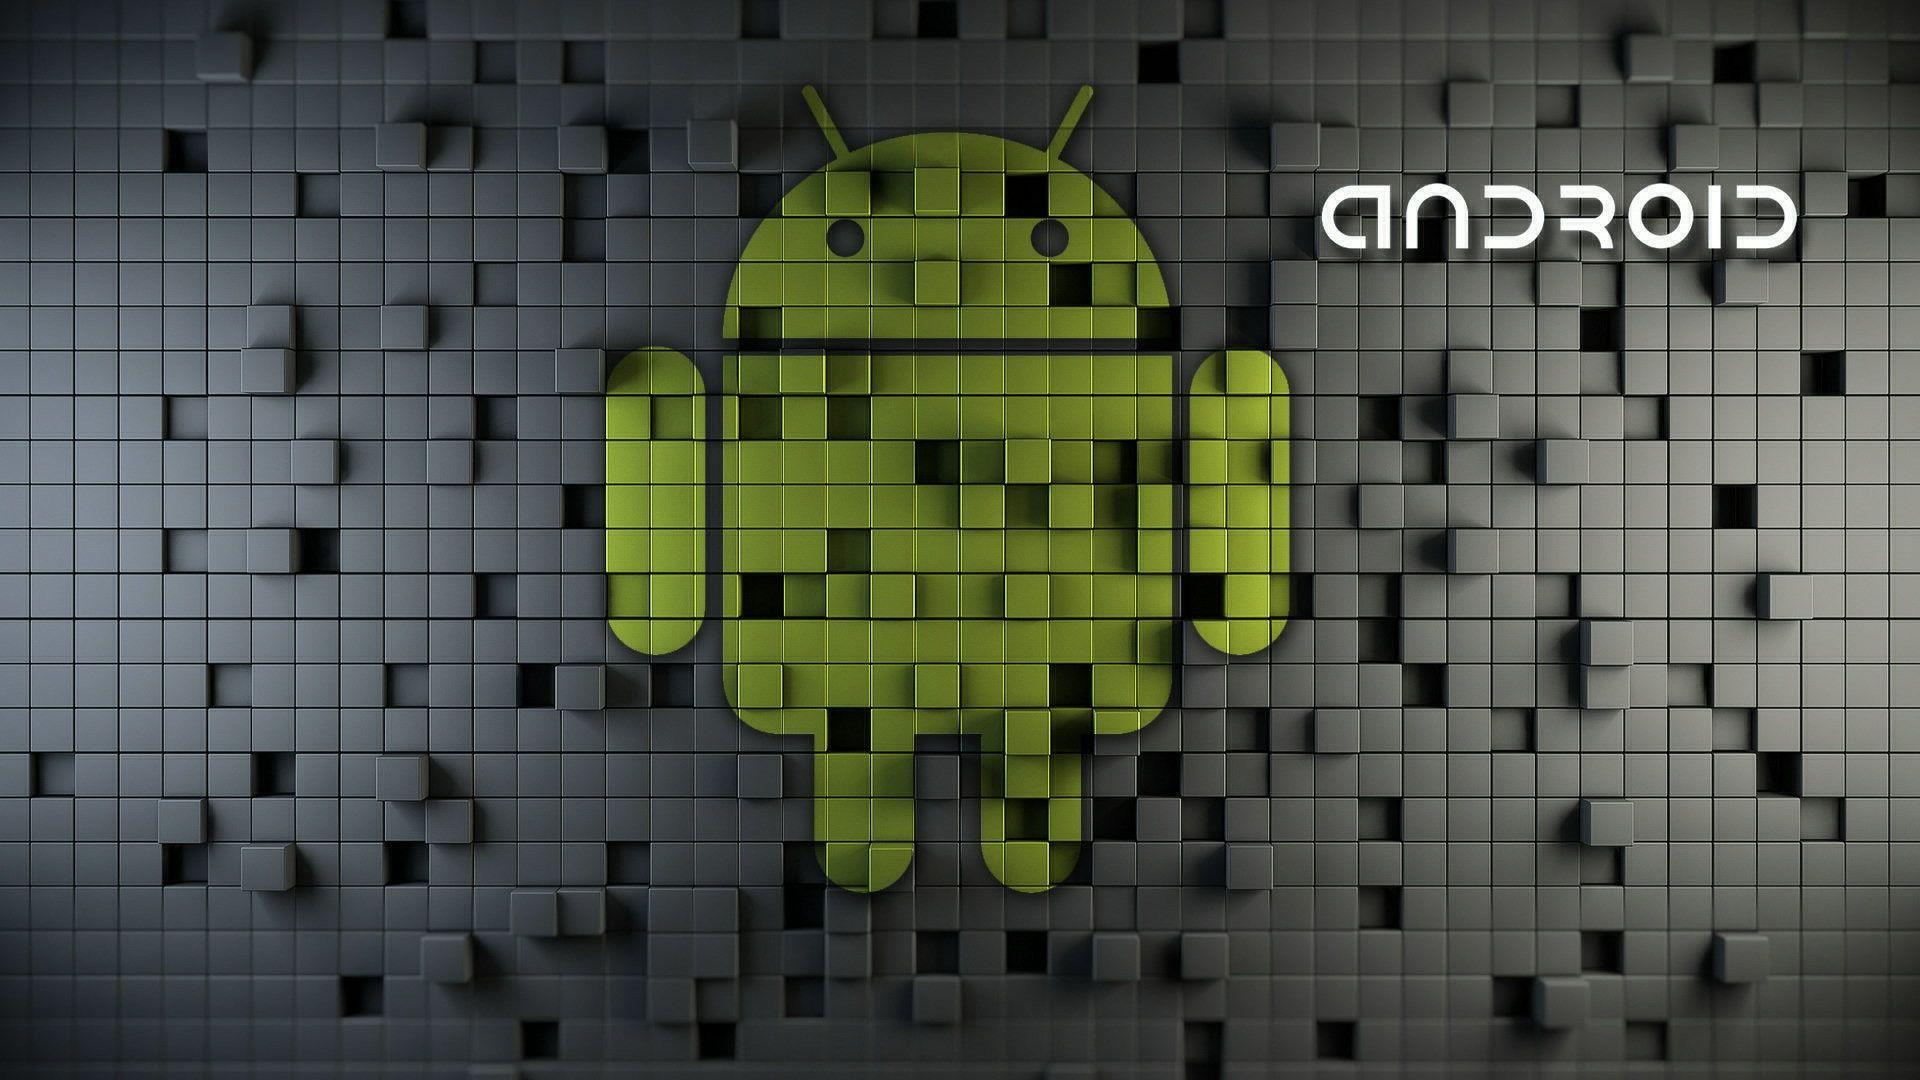 Hd 1920x1080 Android Robot Design Desktop Wallpaper Background